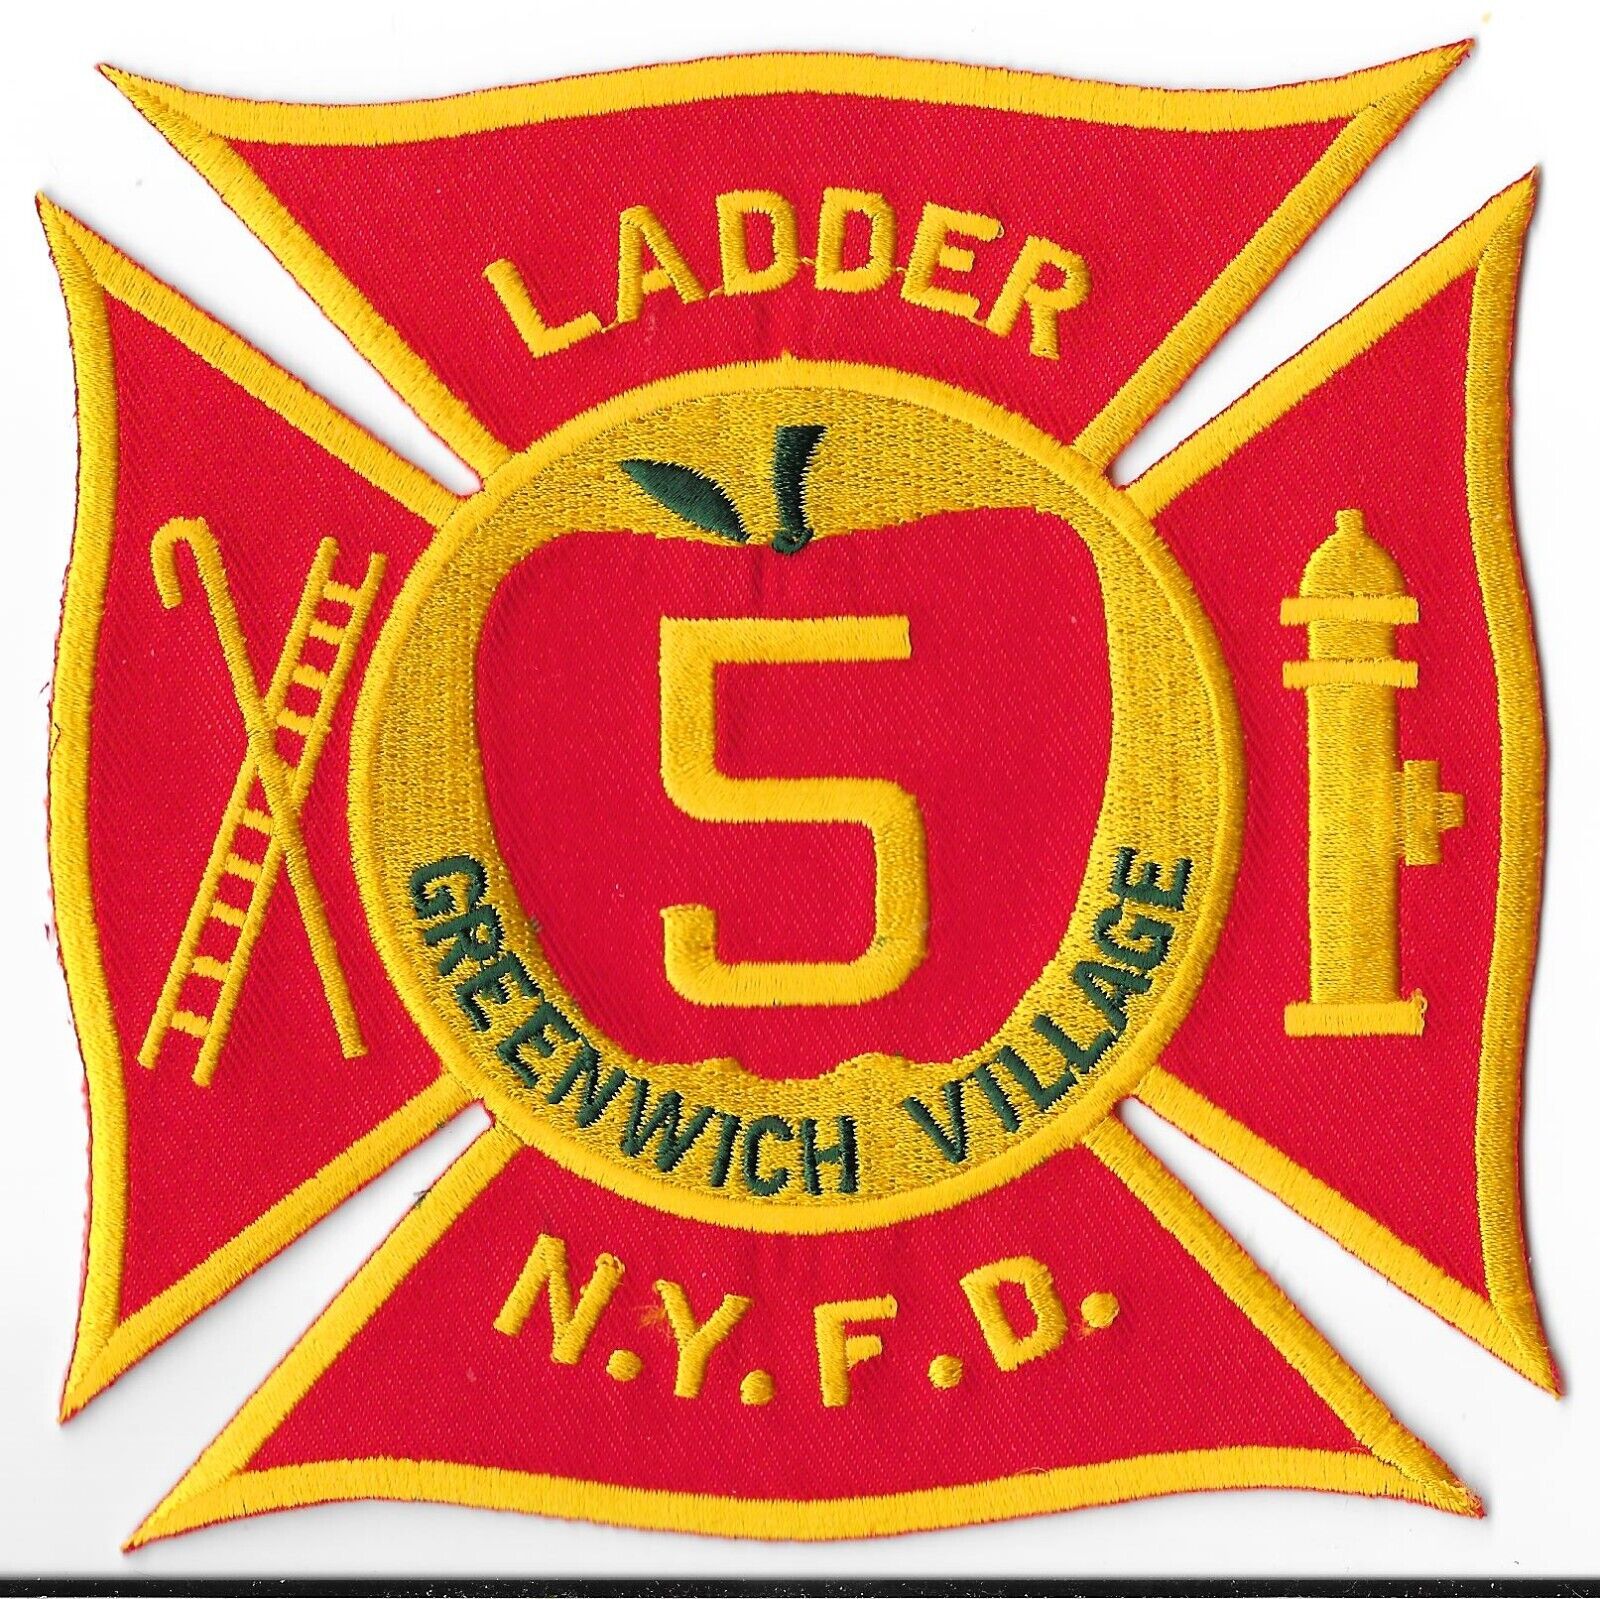 New York Fire Department (FDNY) Ladder 5 Greenwich Village Patch